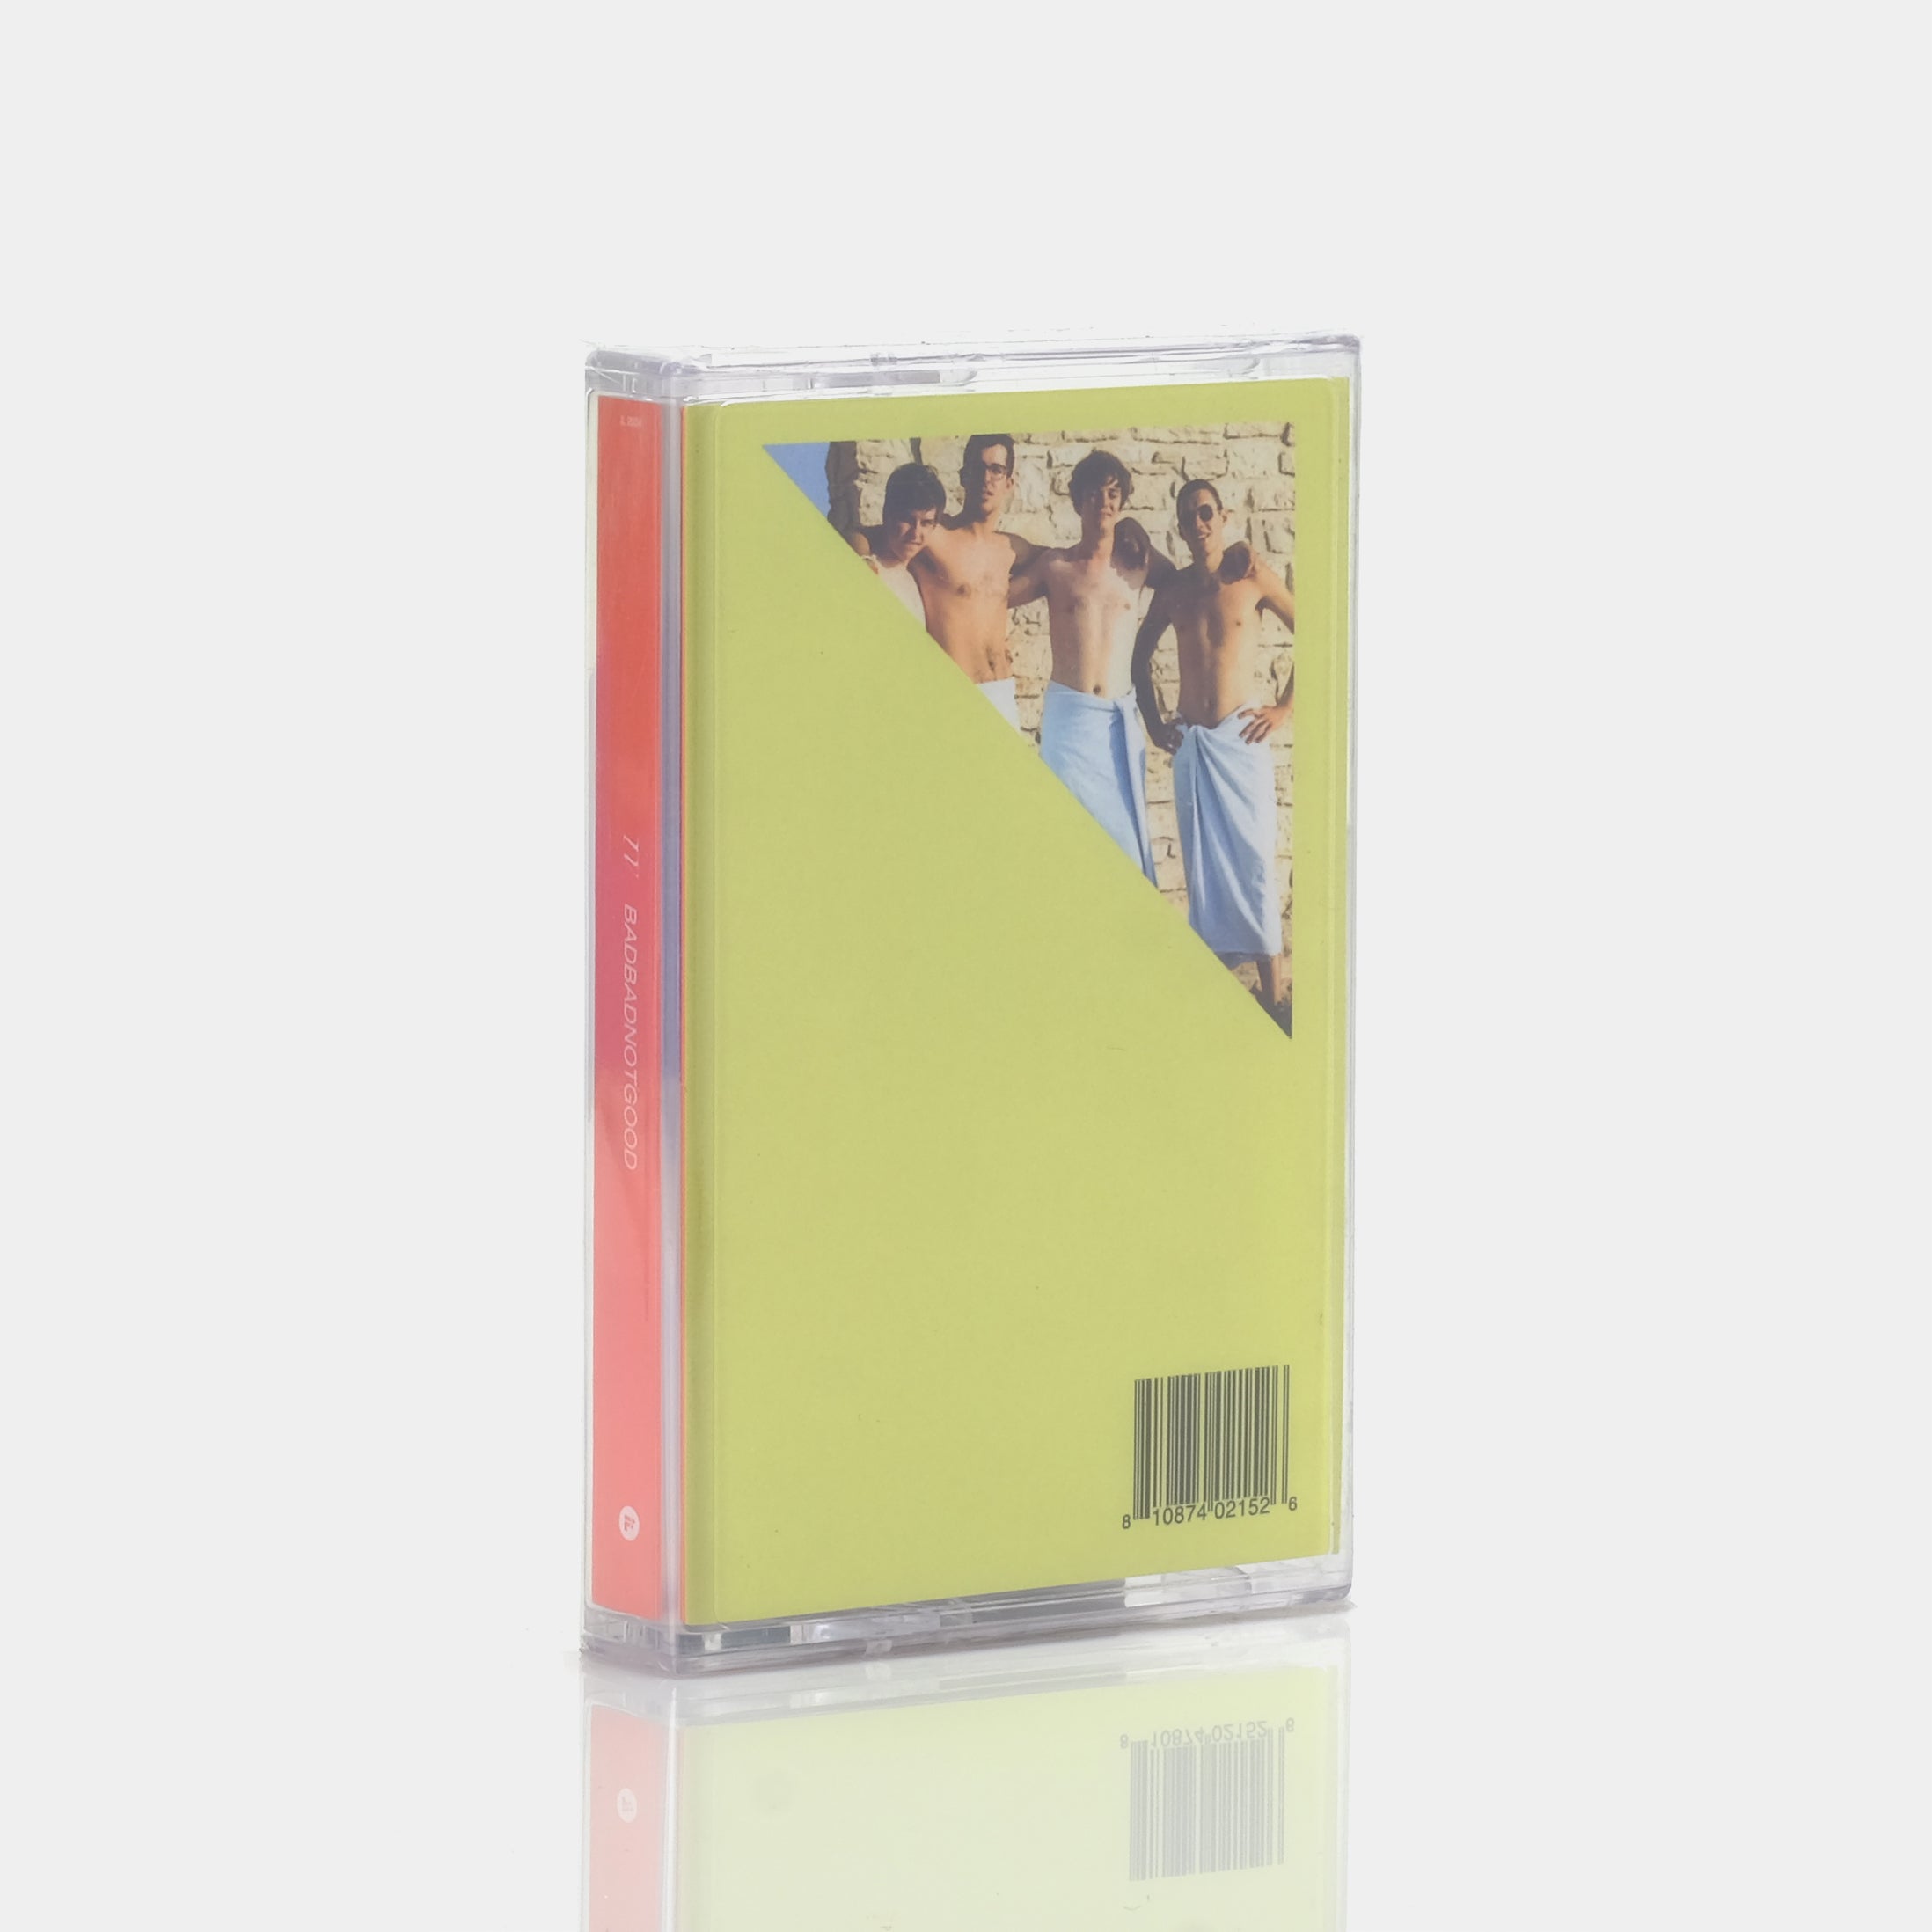 BADBADNOTGOOD - IV Cassette Tape